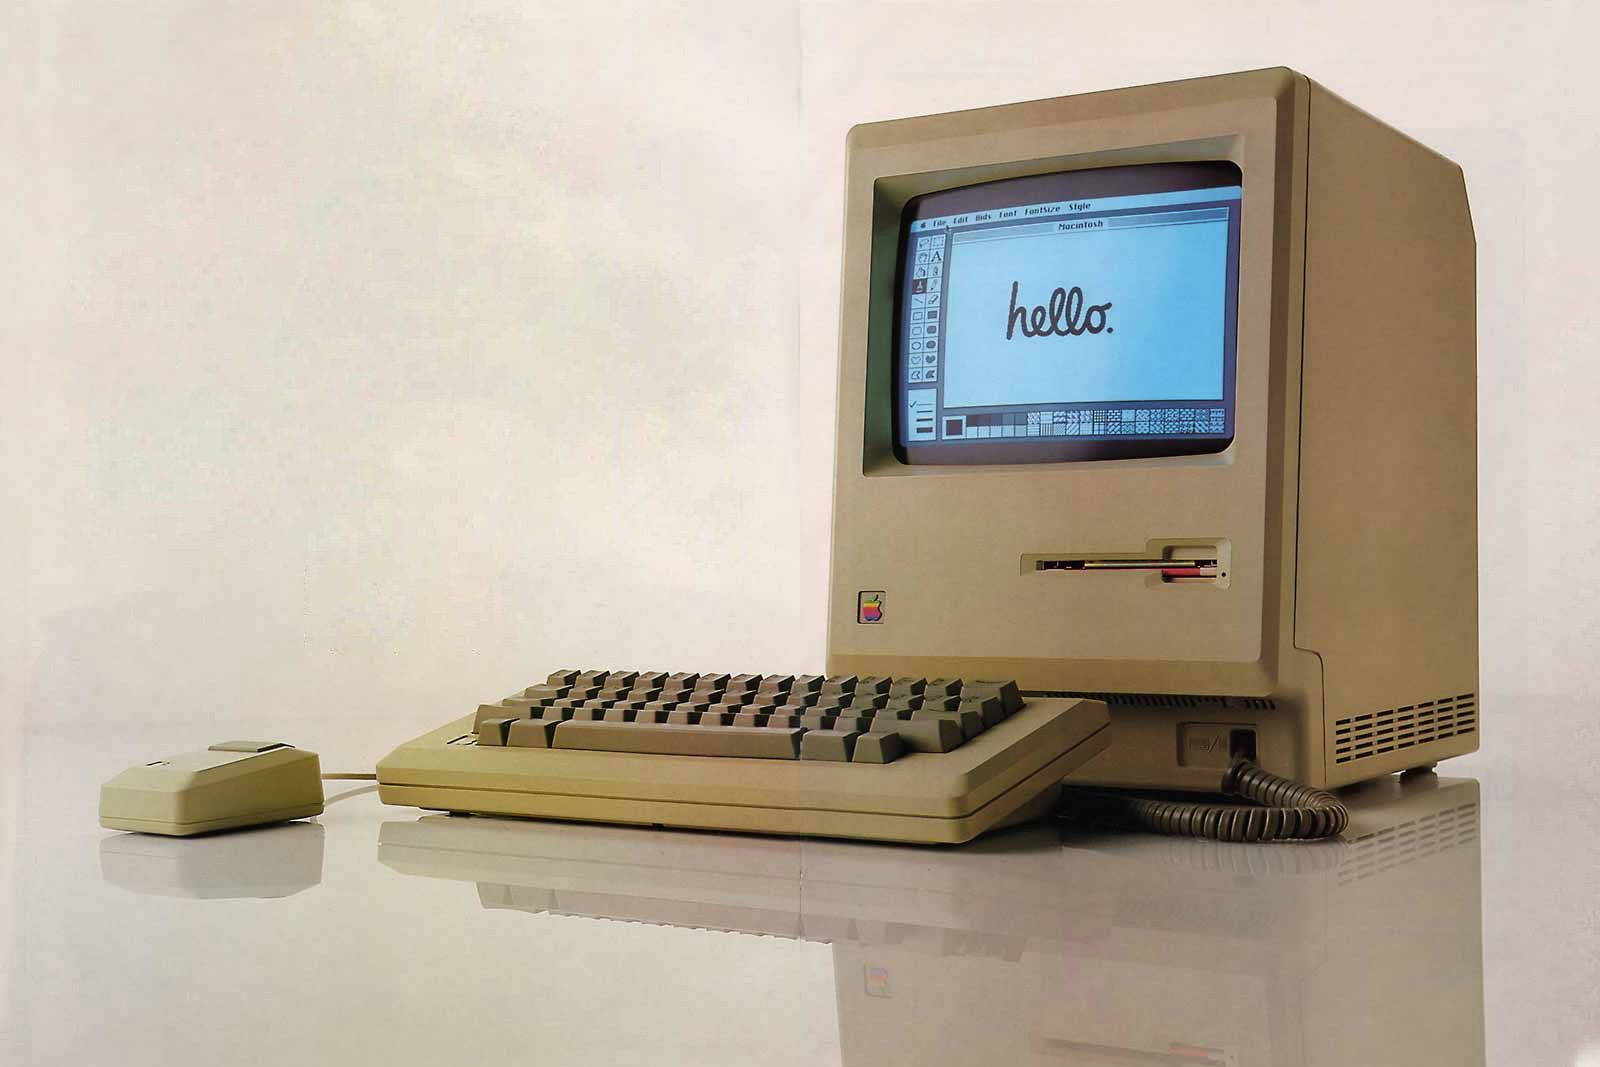 40 years ago, the original Macintosh started a revolution | Digital Trends